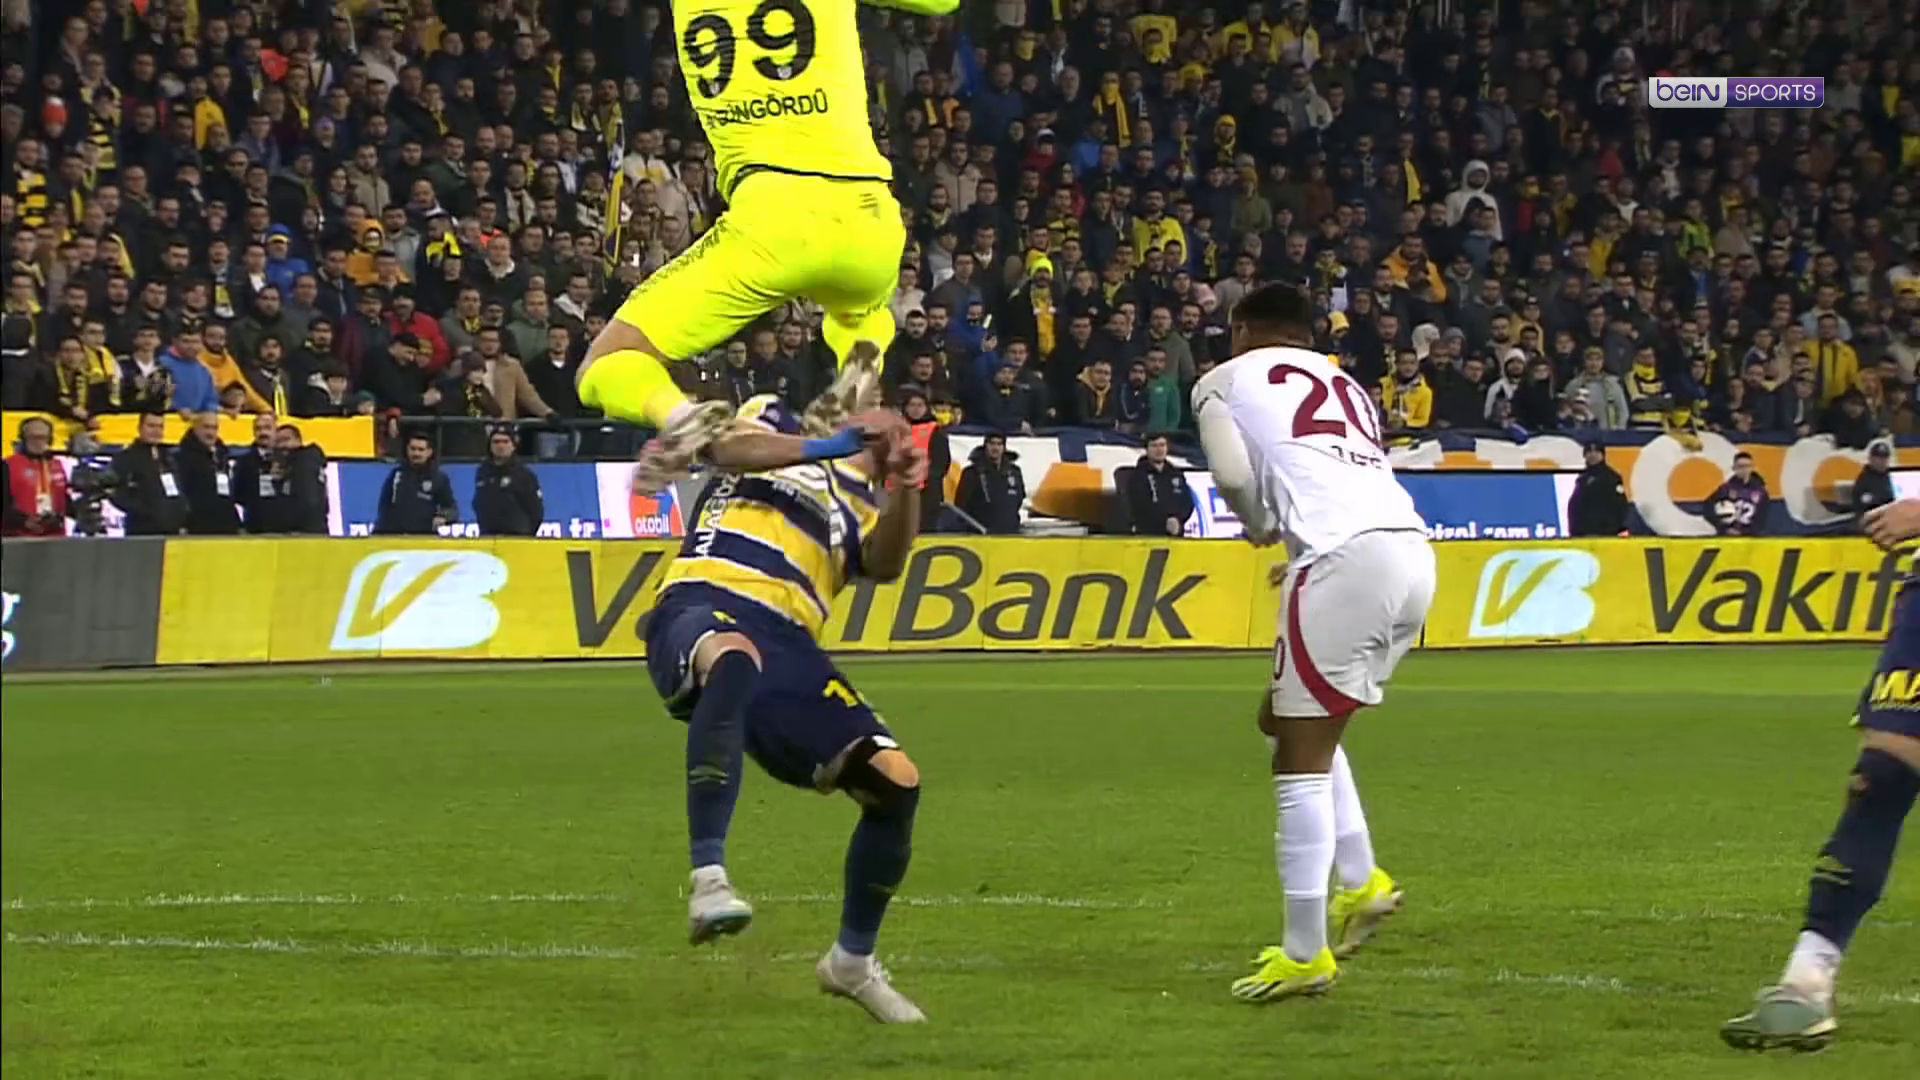 Süper Lig : Scène choc, un gardien met son défenseur K.O.